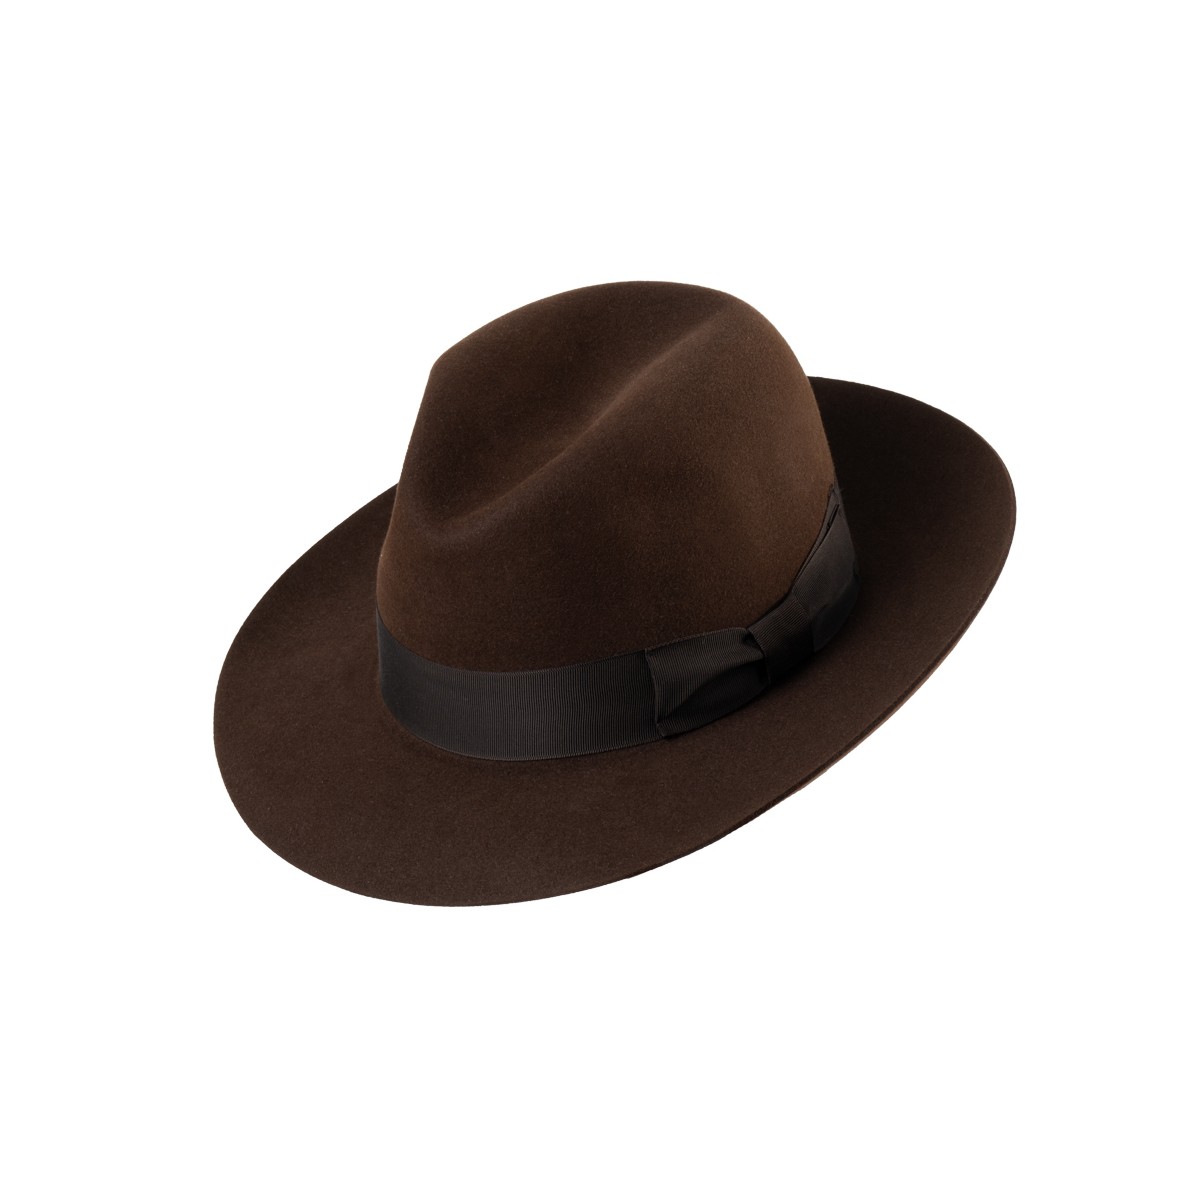 https://www.fernandezyroche.com/2985-large_default/indiana-fernandez-y-roche-sombrero-clasico-indiana-con-cinta-grosgrain-a-tono.jpg